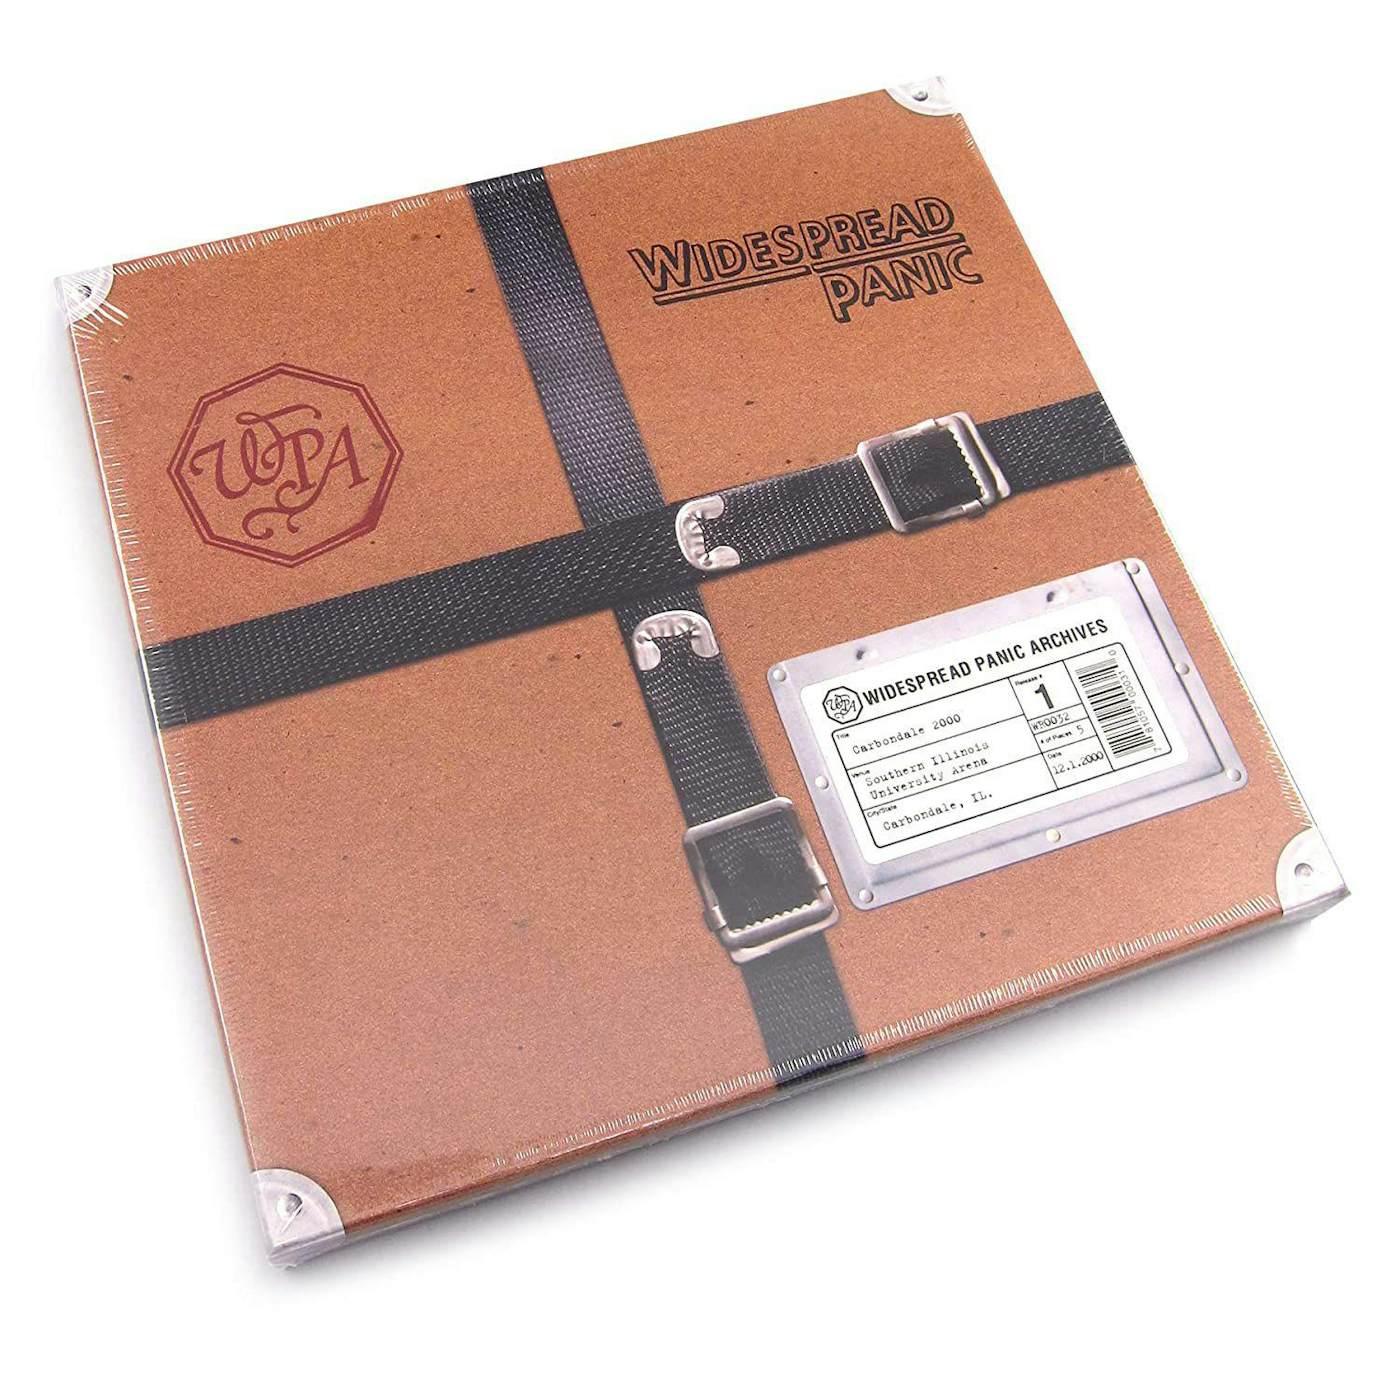 Widespread Panic CARBONDALE 2000 (6 DISC BOX SET) (Vinyl)